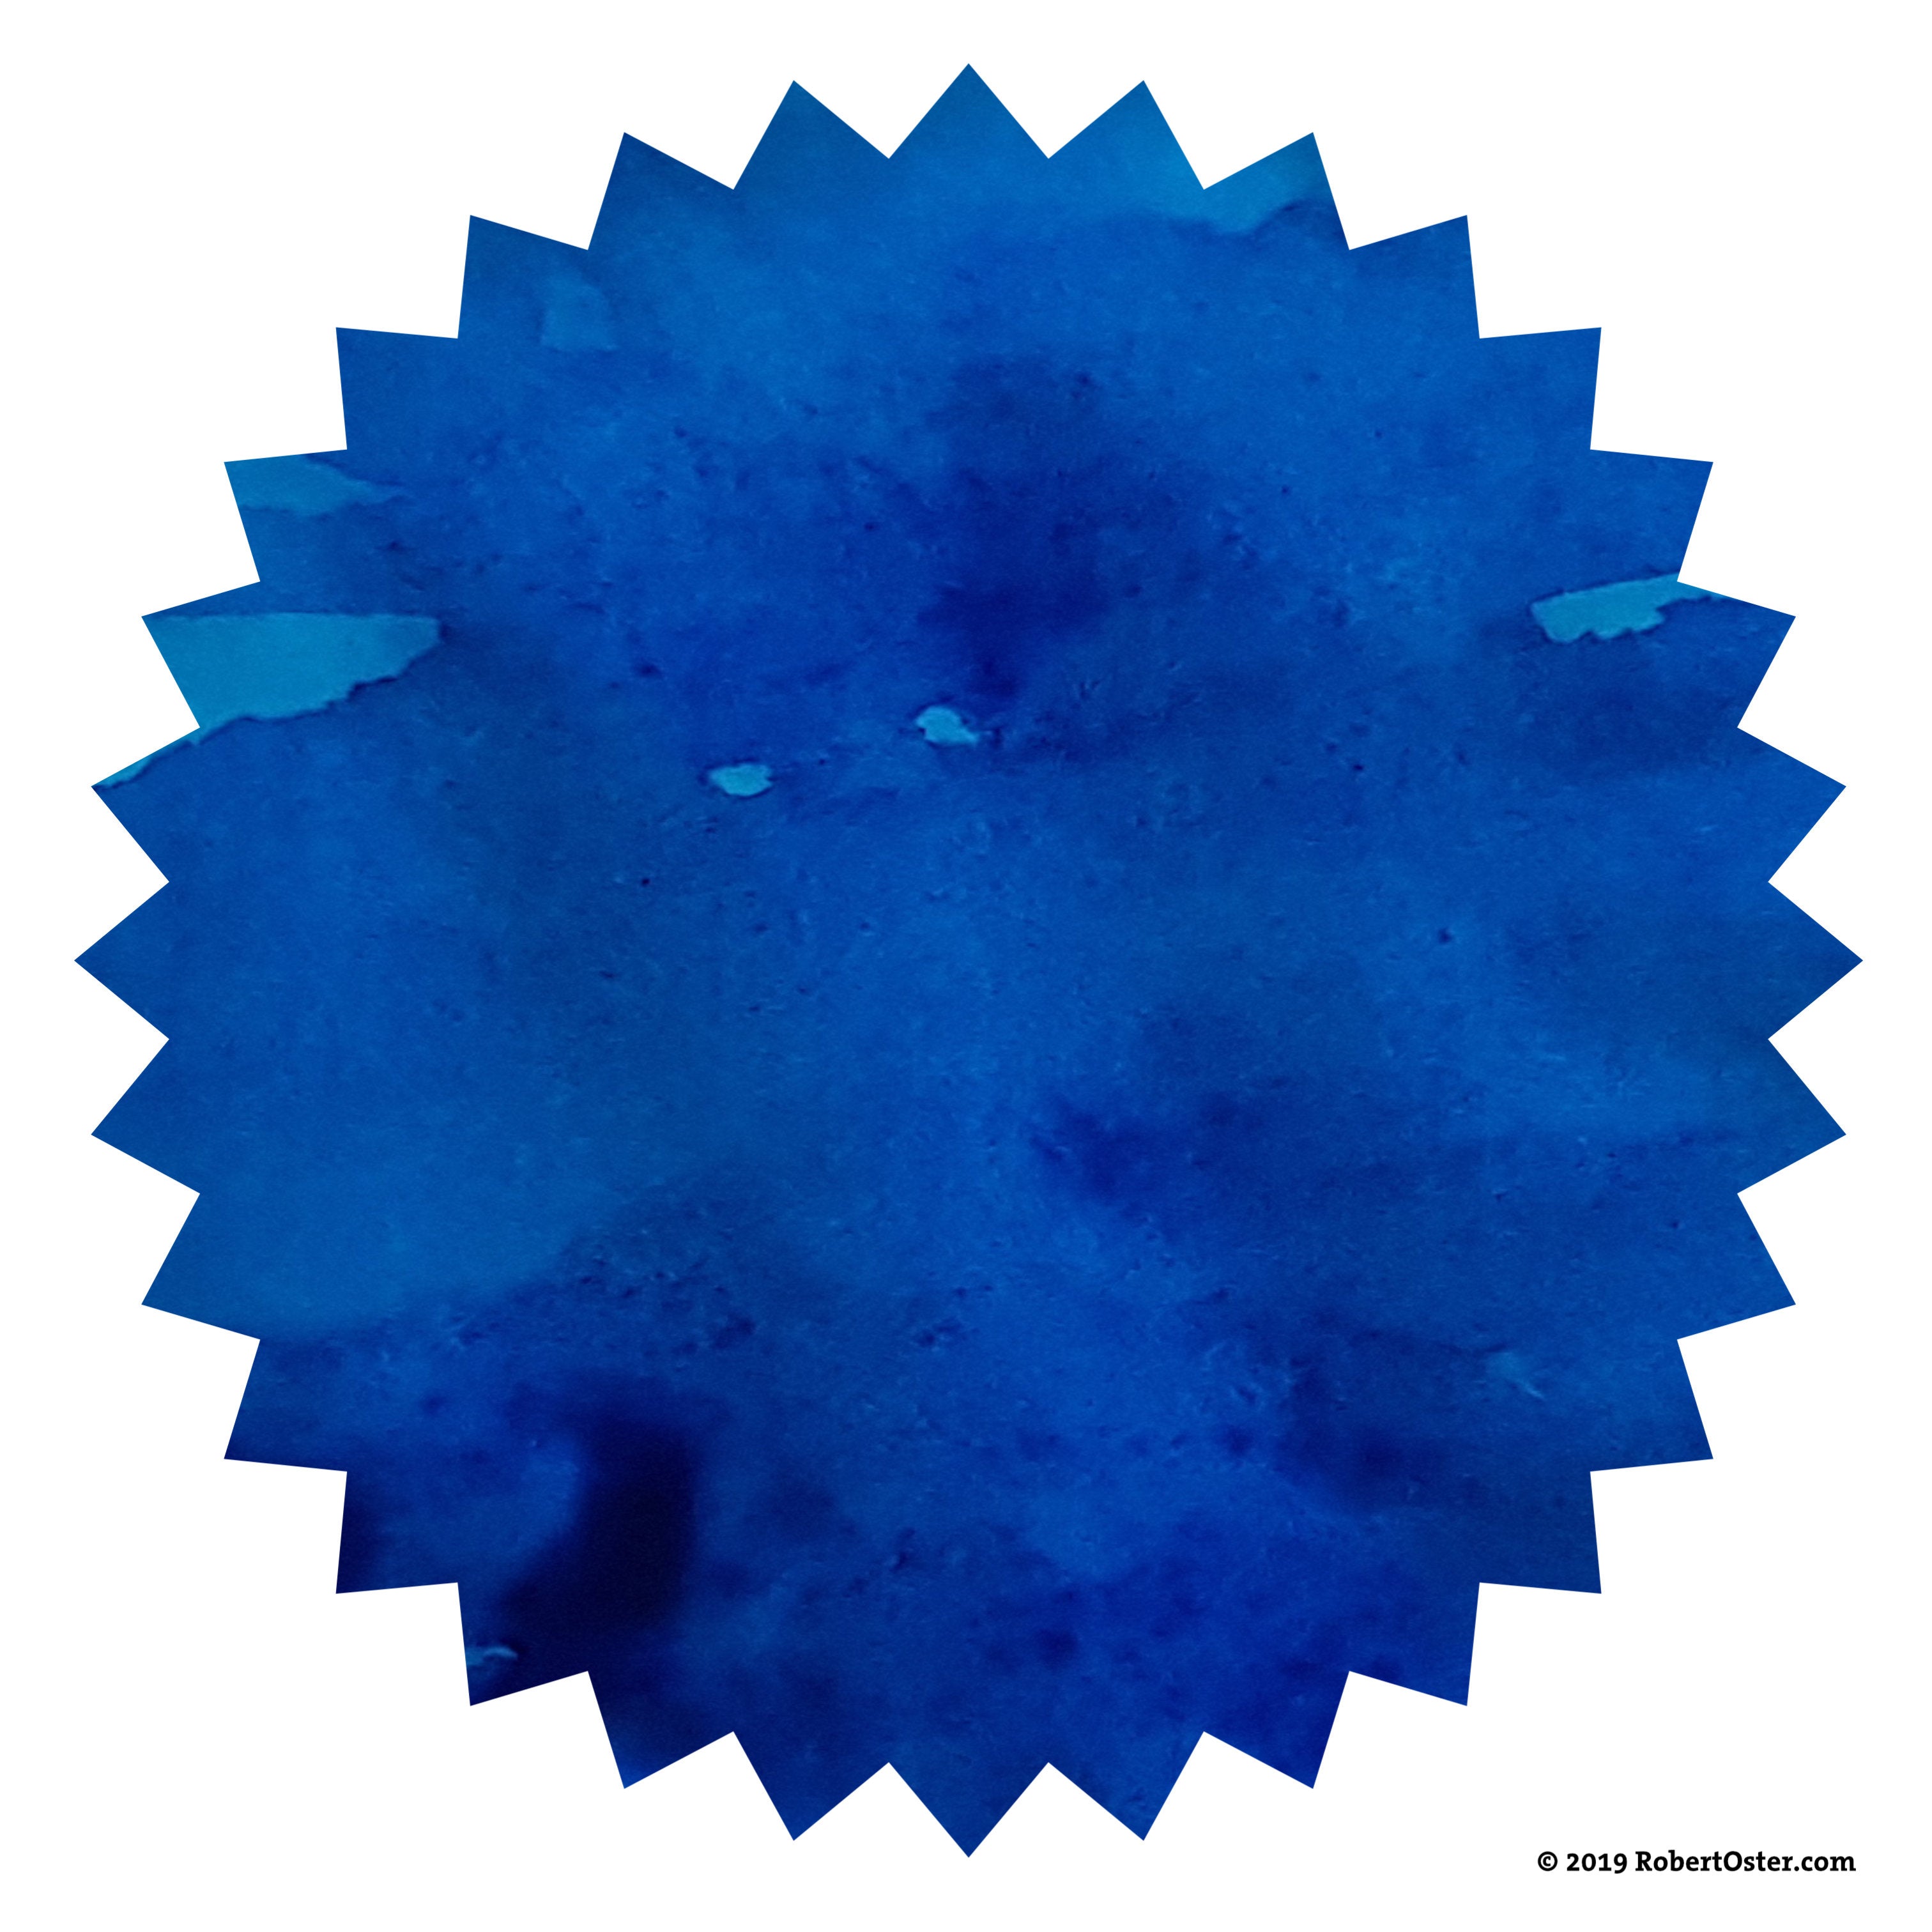 Robert Oster - Blue Water Ice